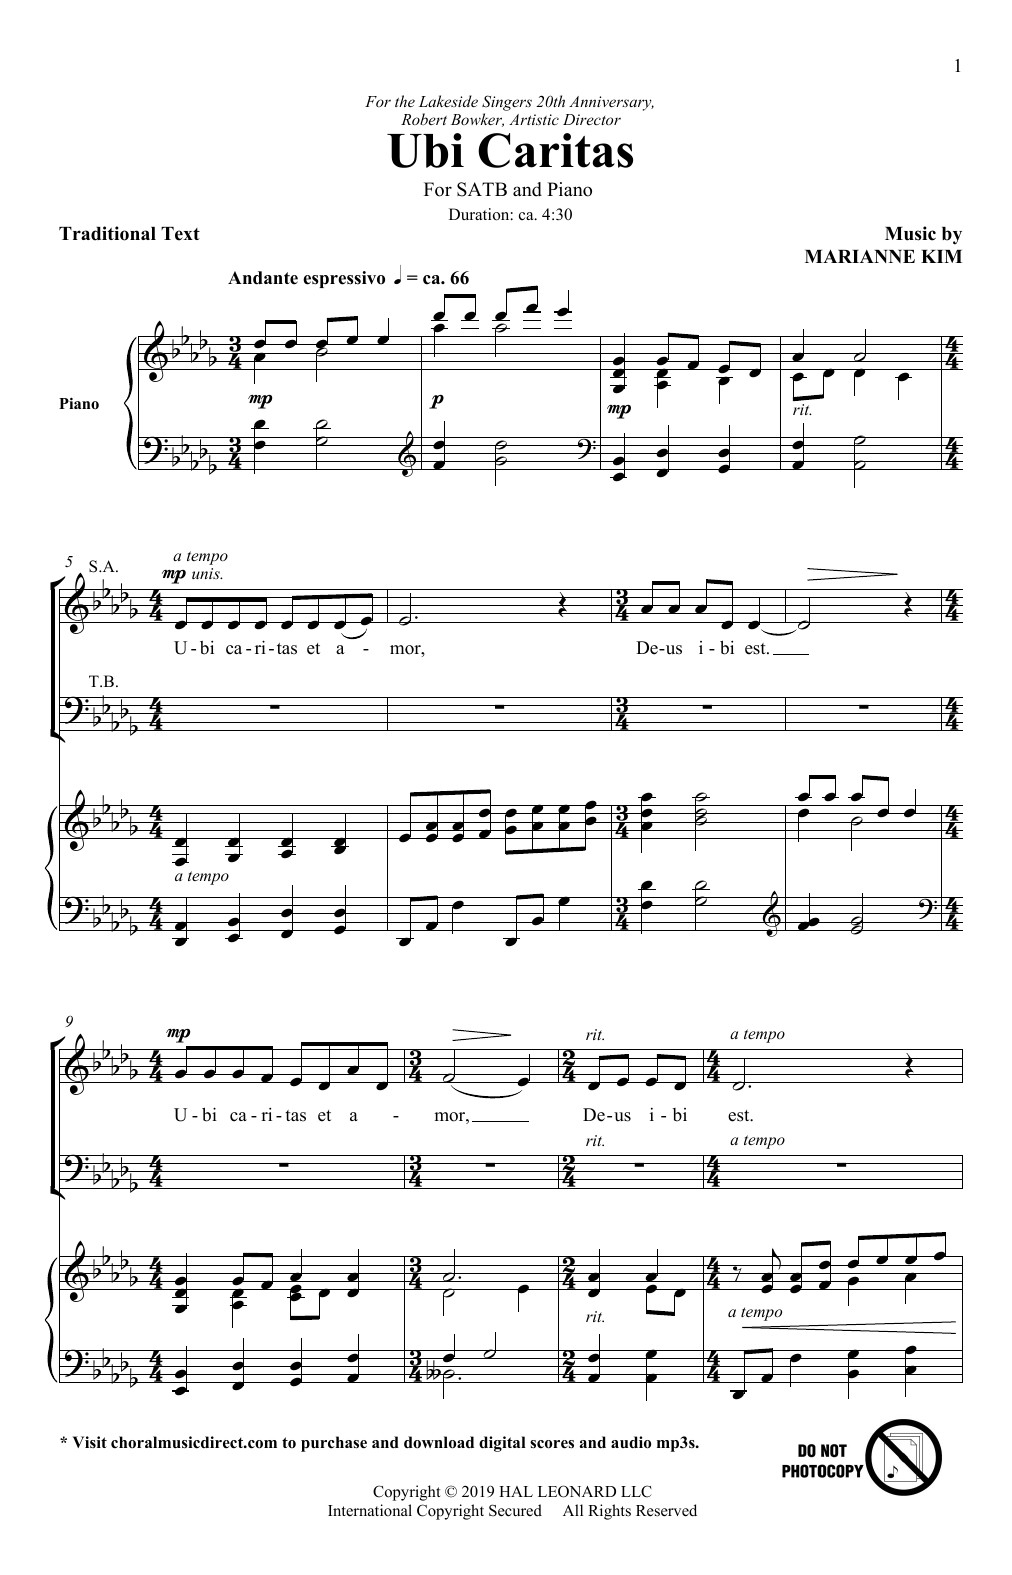 Download Marianne Kim Ubi Caritas Sheet Music and learn how to play SATB Choir PDF digital score in minutes